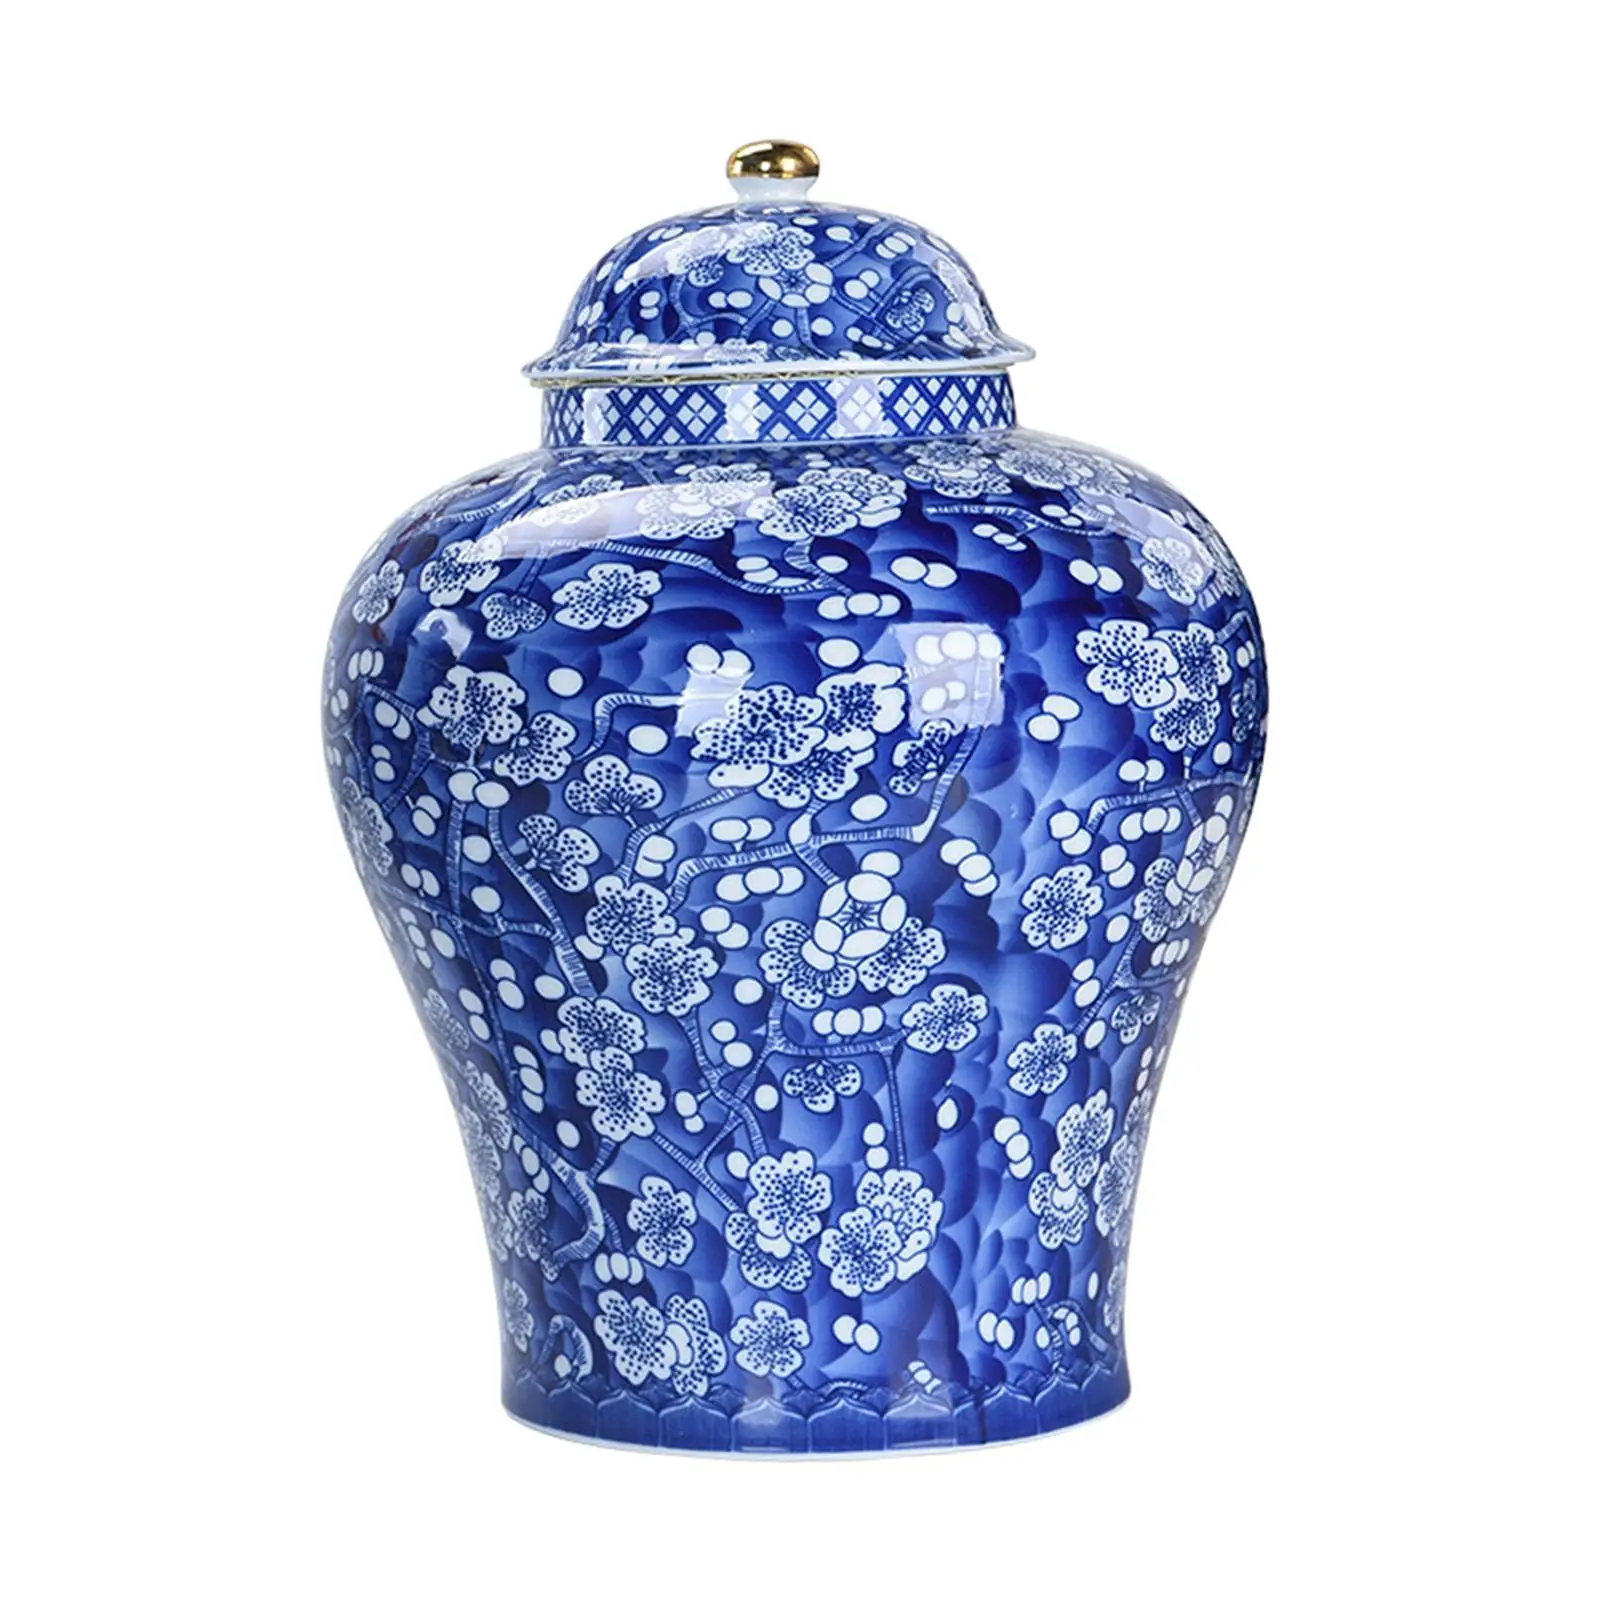 Mandarin Plum Porcelain Vase, Ginger Jar Temple Jar Blue and  Your  Decorative Classical Home  Piece Glazed